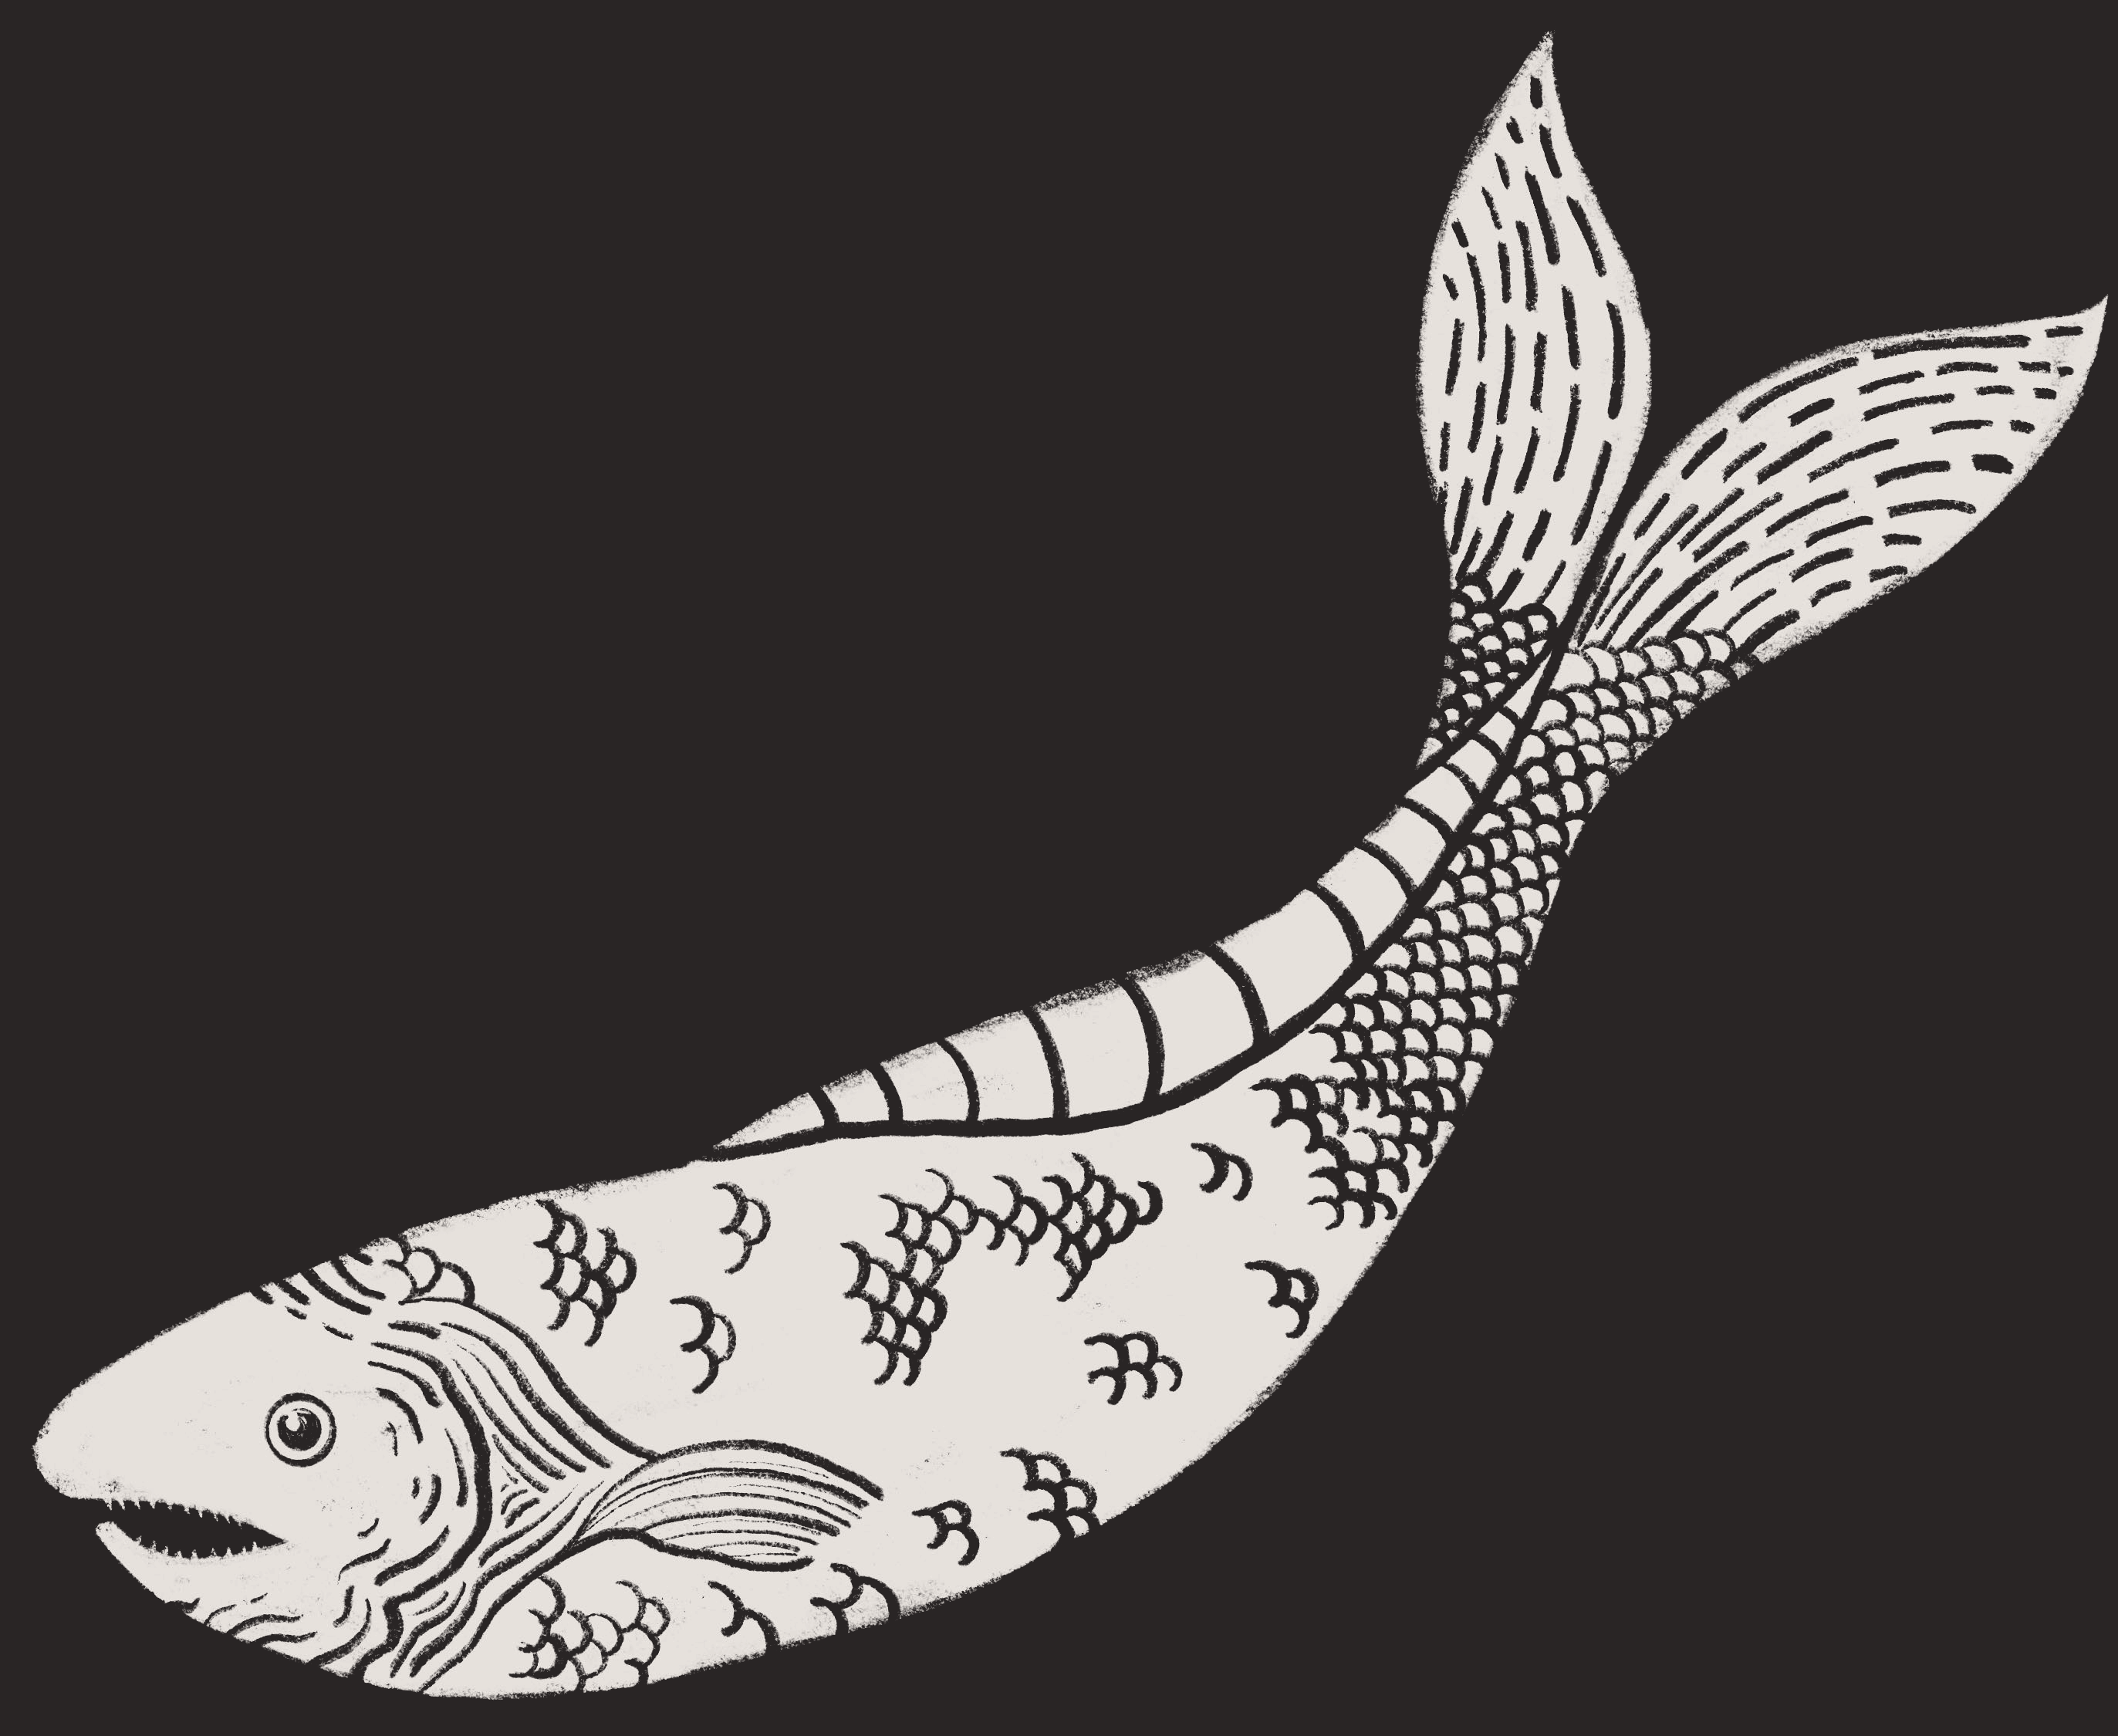 illustration of Nocta's native fish the night salmon